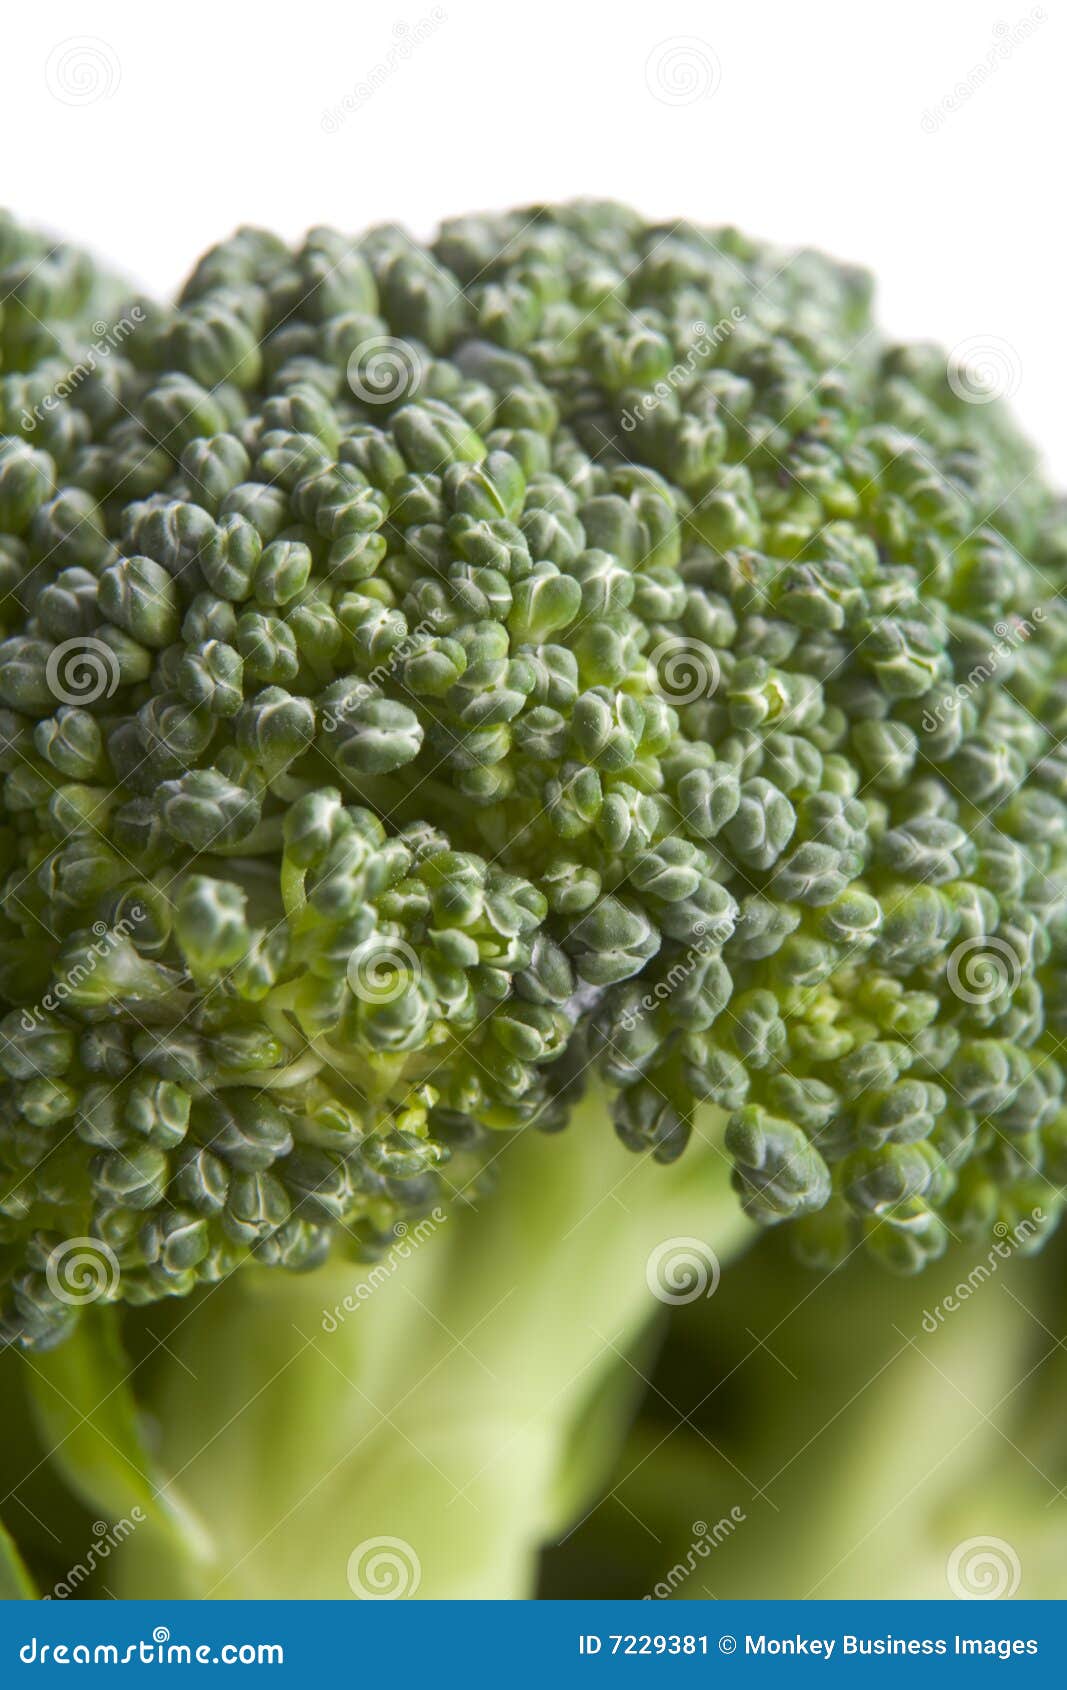 broccoli floret